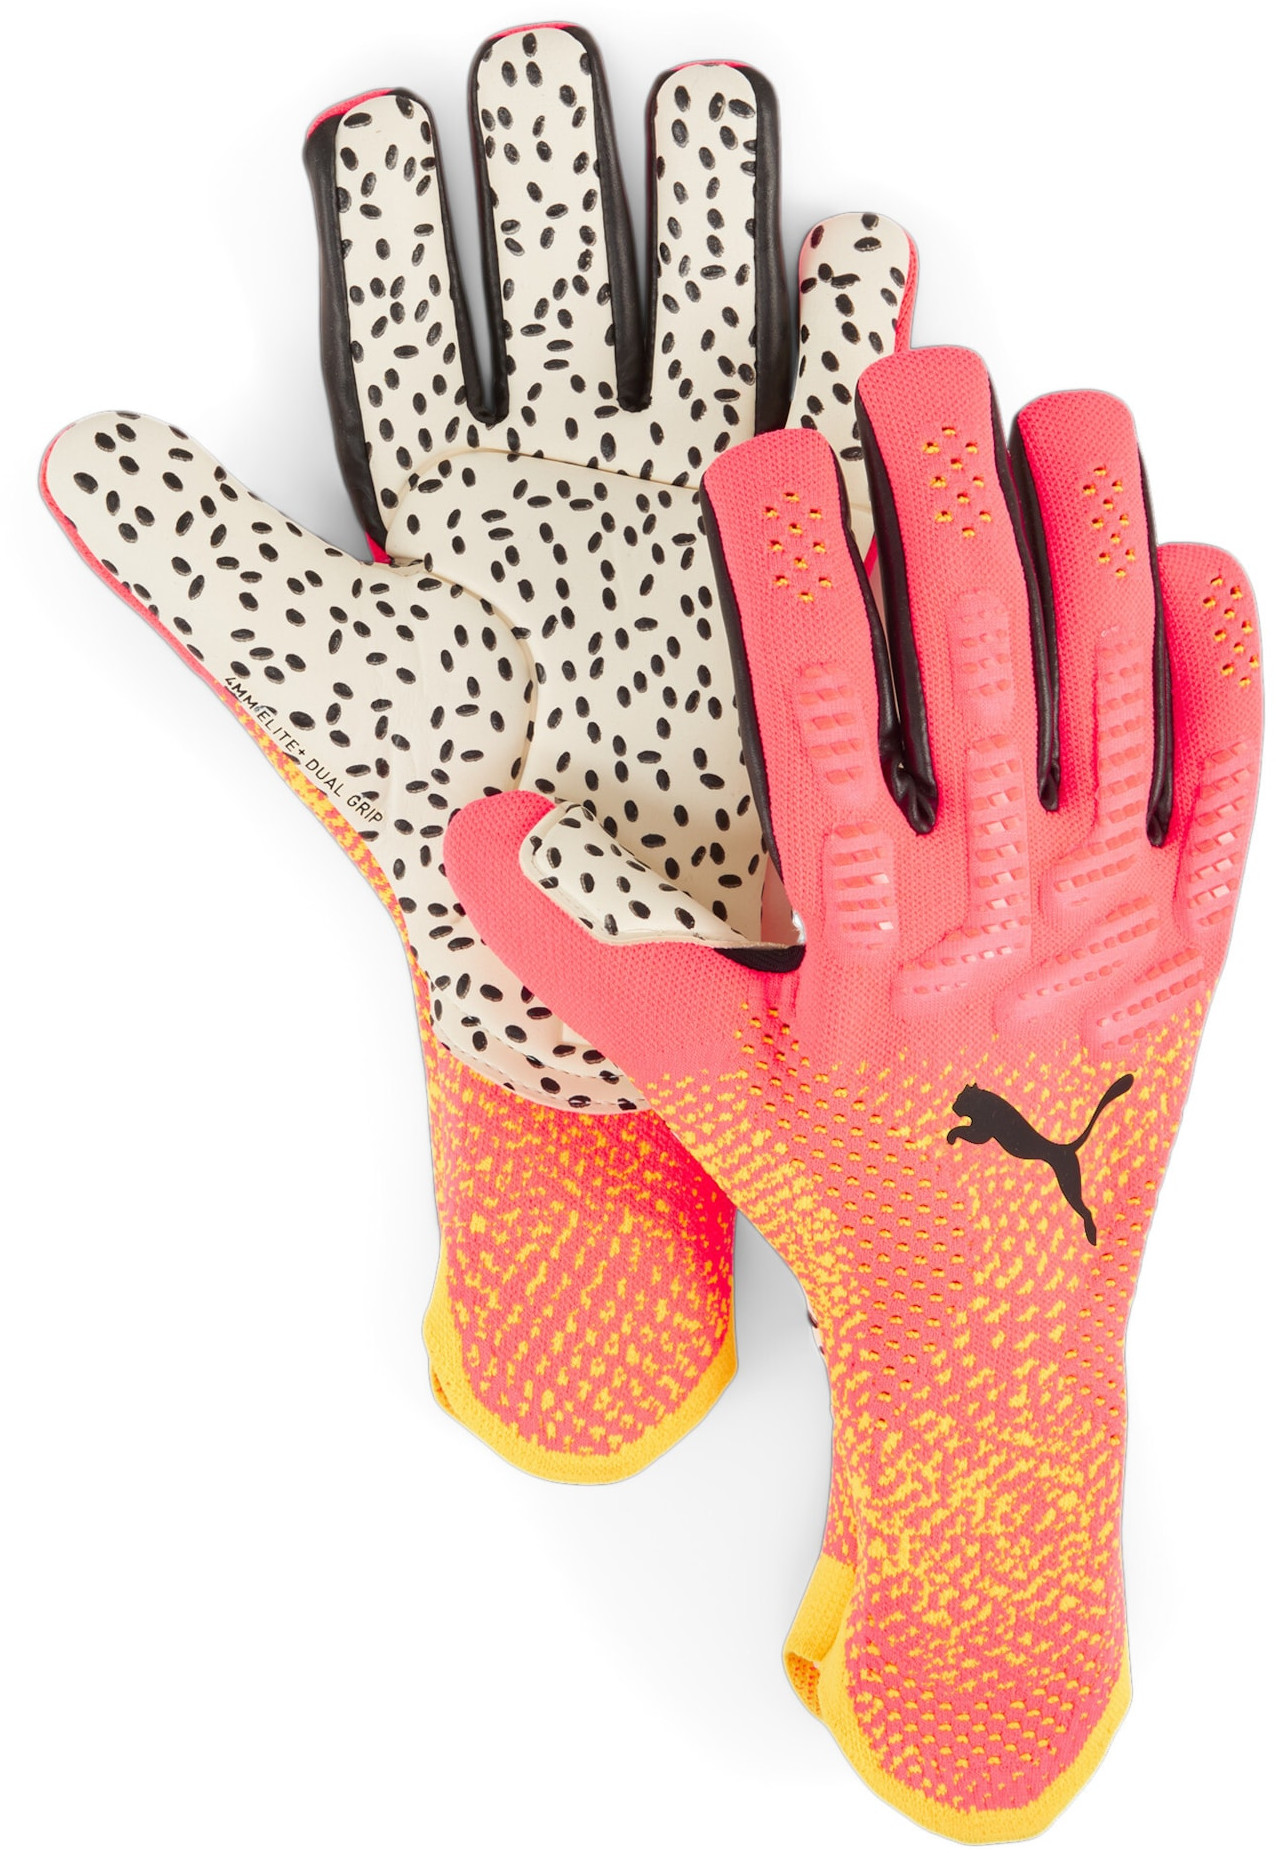 Goalkeeper's gloves Puma FUTURE Ultimate NC